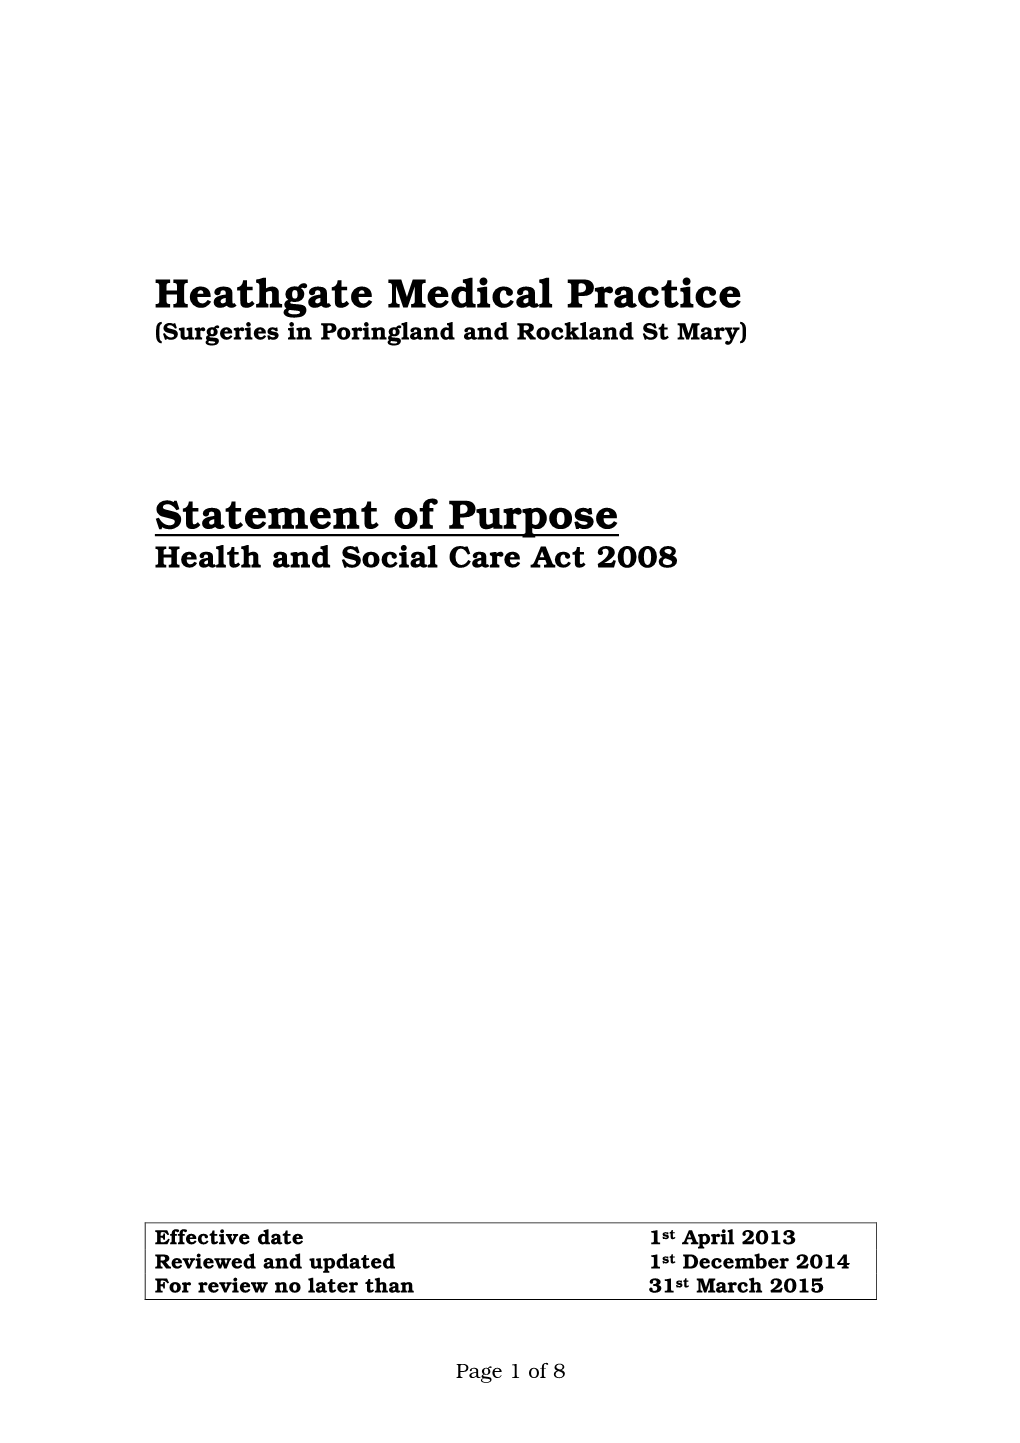 Heathgate Medical Practice Statement of Purpose